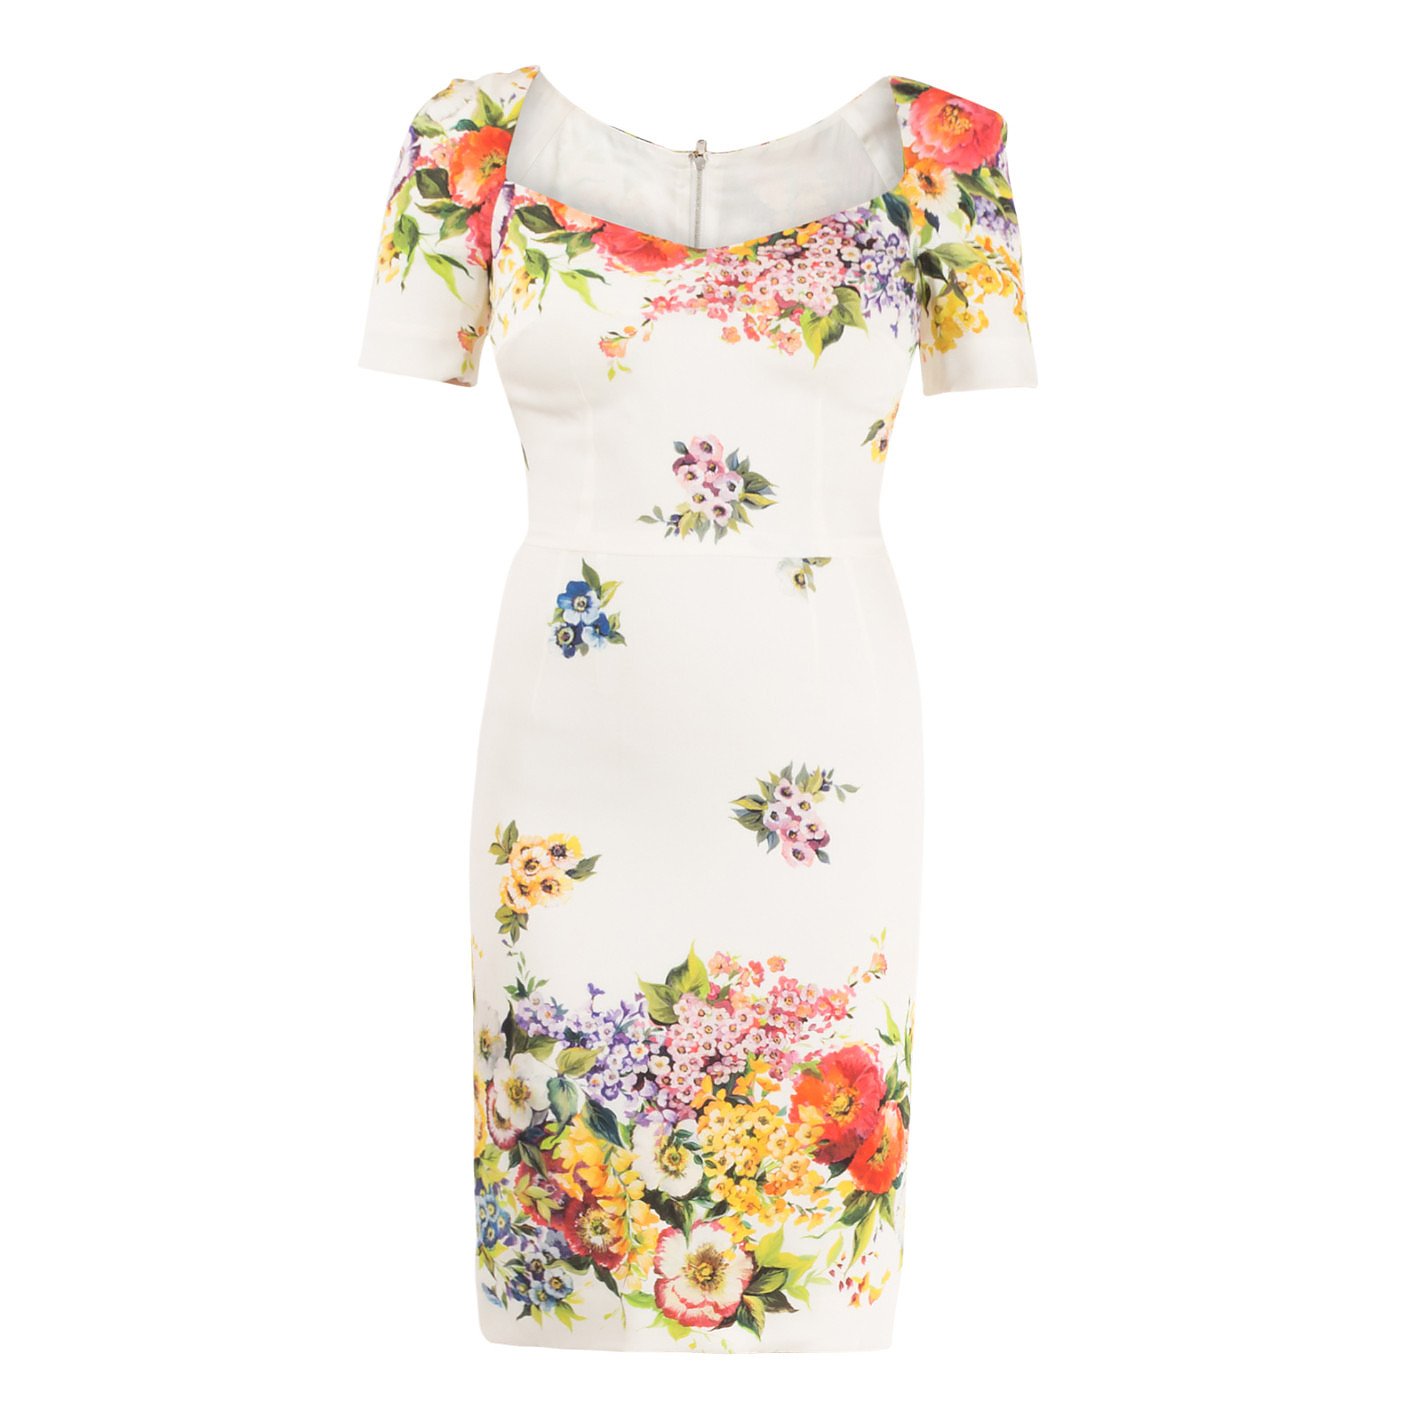 DOLCE & GABBANA Floral-Print Silk Charmeuse Dress